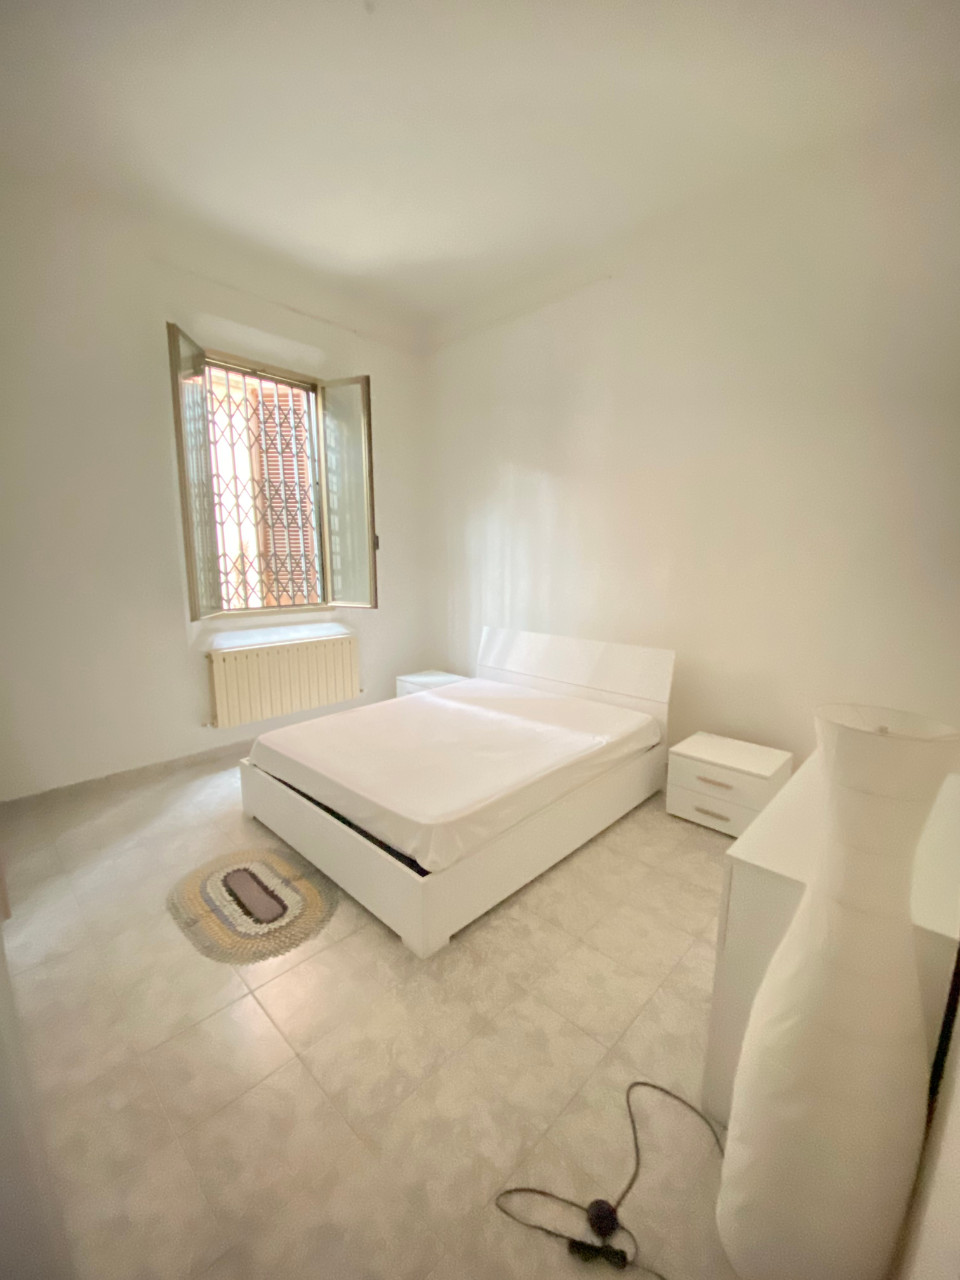 Affitto - Appartamento - Saffi - Bologna - € 800